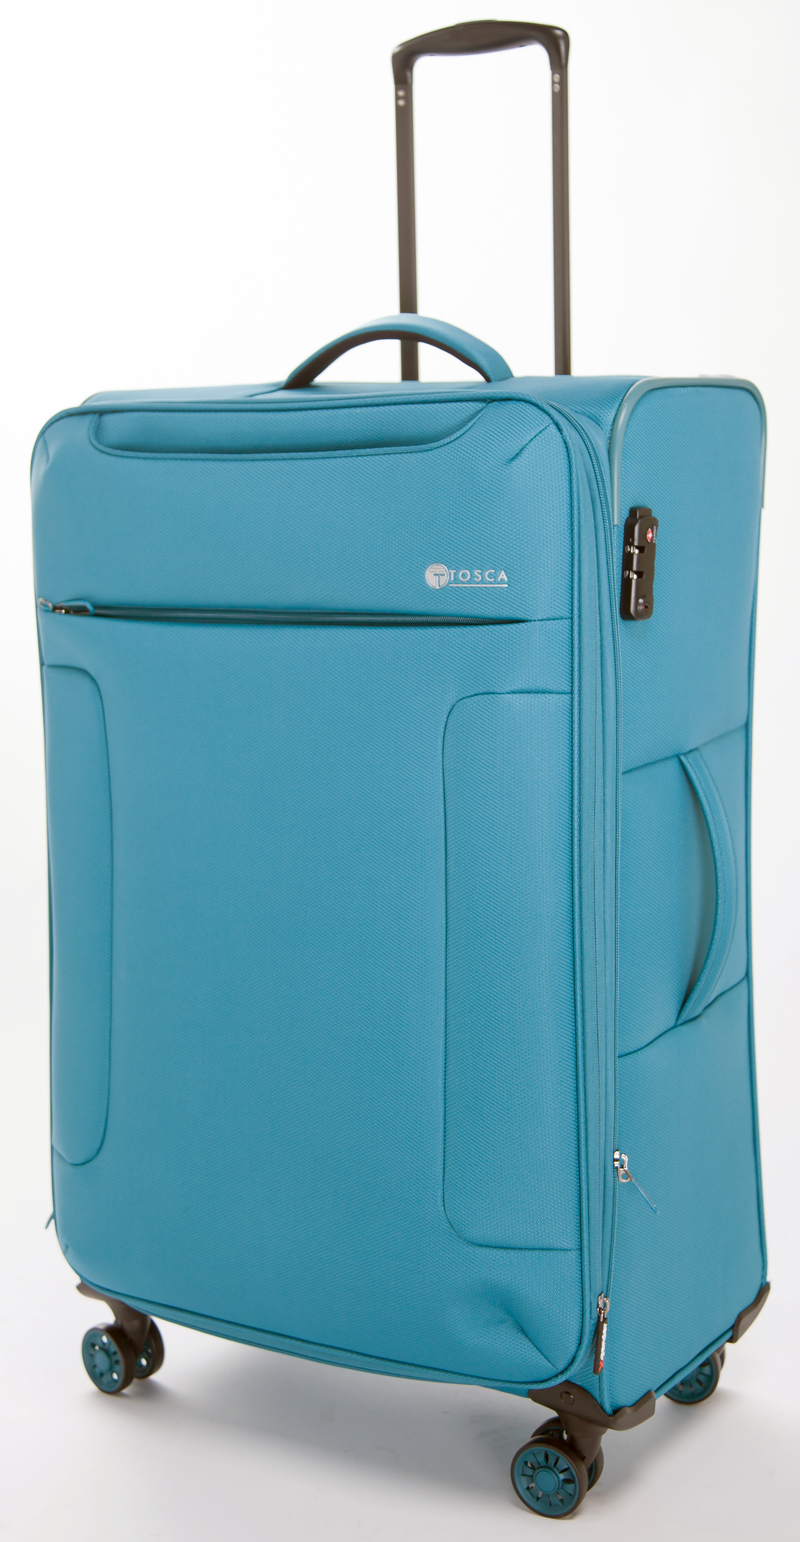 Tosca So-Lite softside Teal trolley luggage set AIR4044 sizes 78cm/66cm/52cm